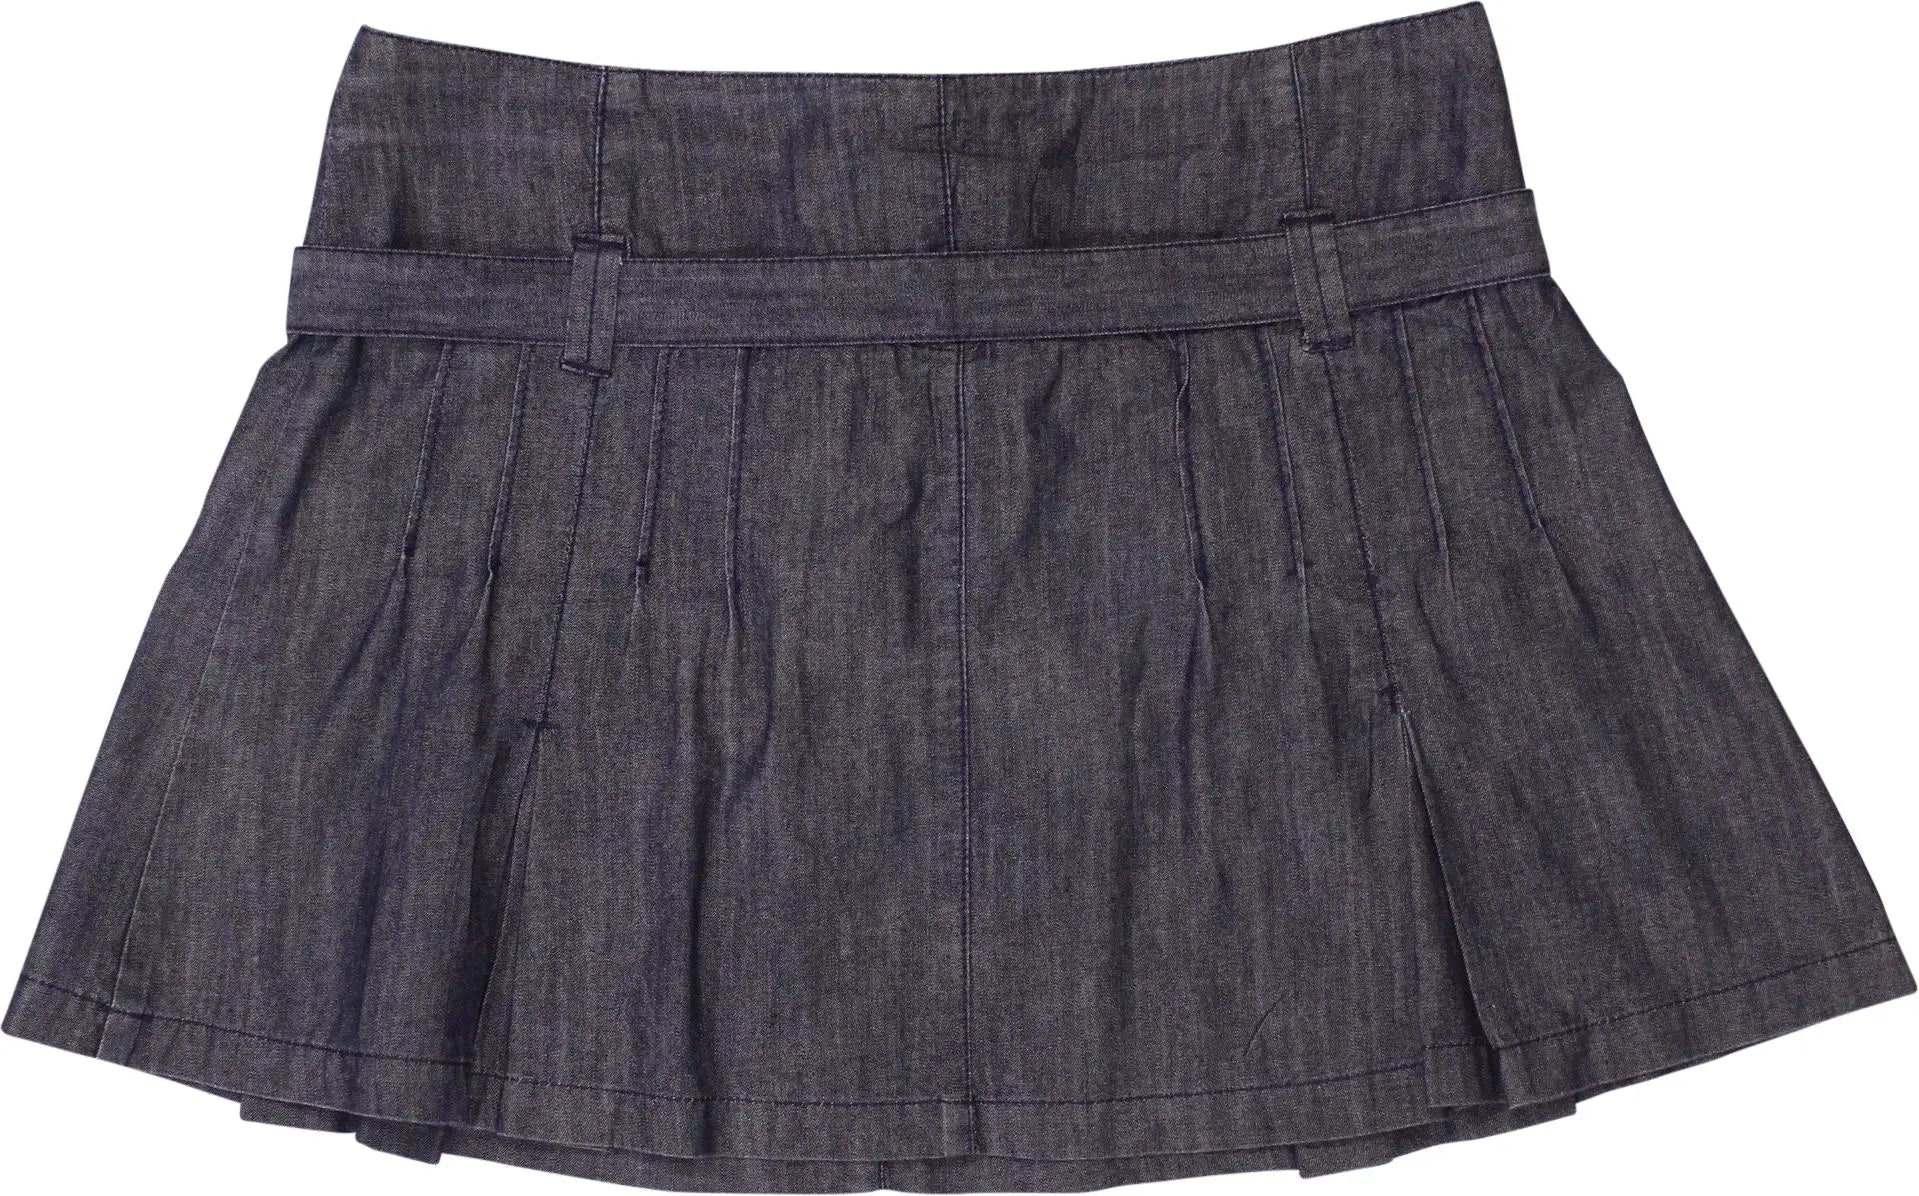 Blue Ridge - Denim Skirt- ThriftTale.com - Vintage and second handclothing